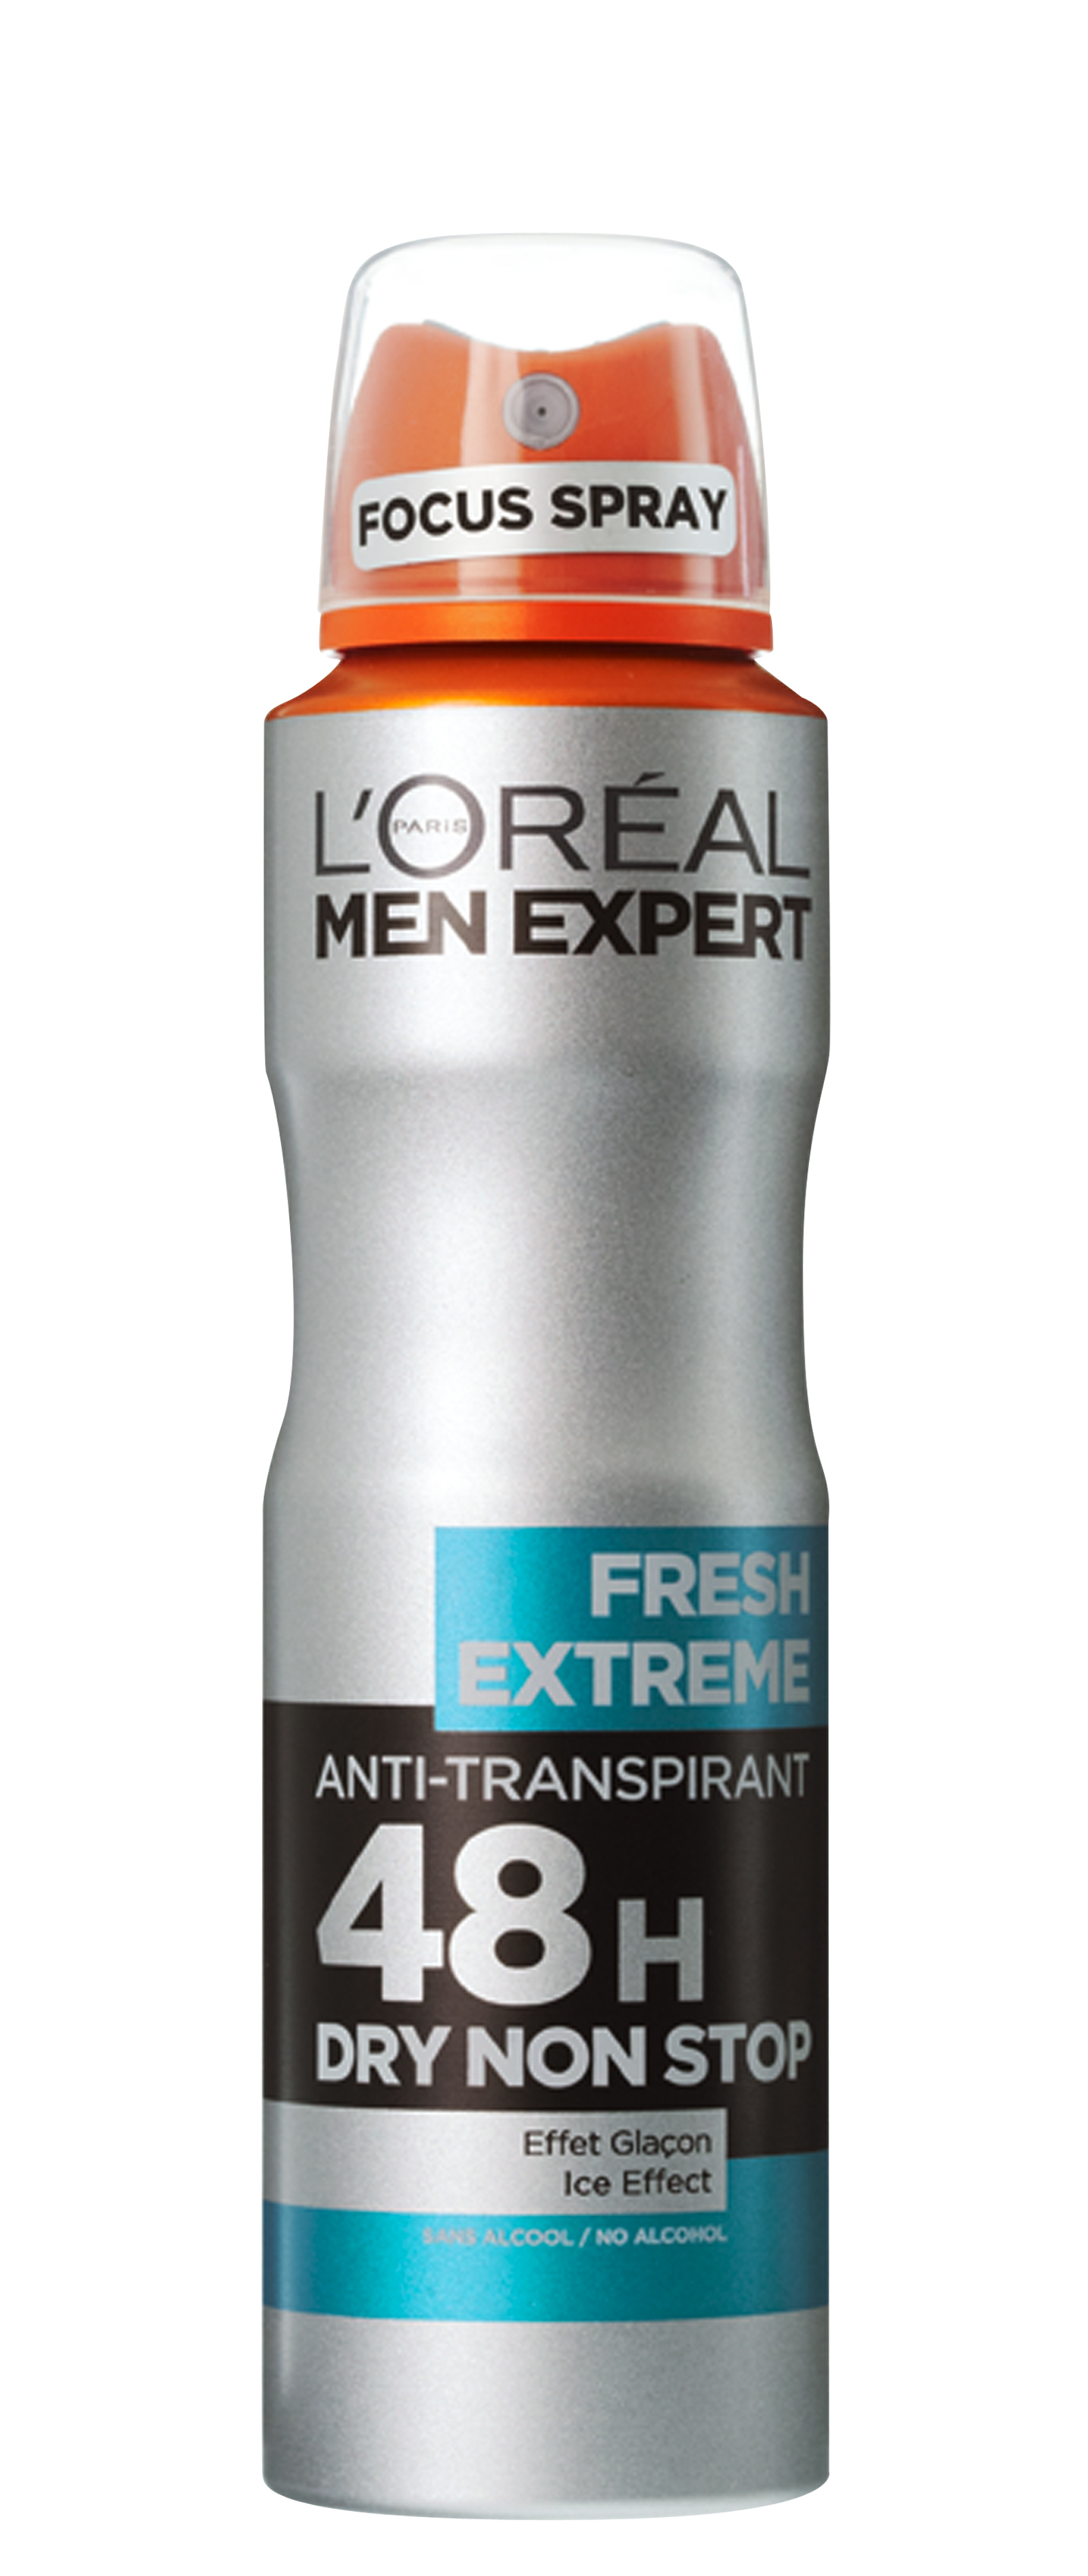 L'Oréal Men Expert Deodorant Men Expert Fresh Extreme 48H - 150ml - Deodorant Spray